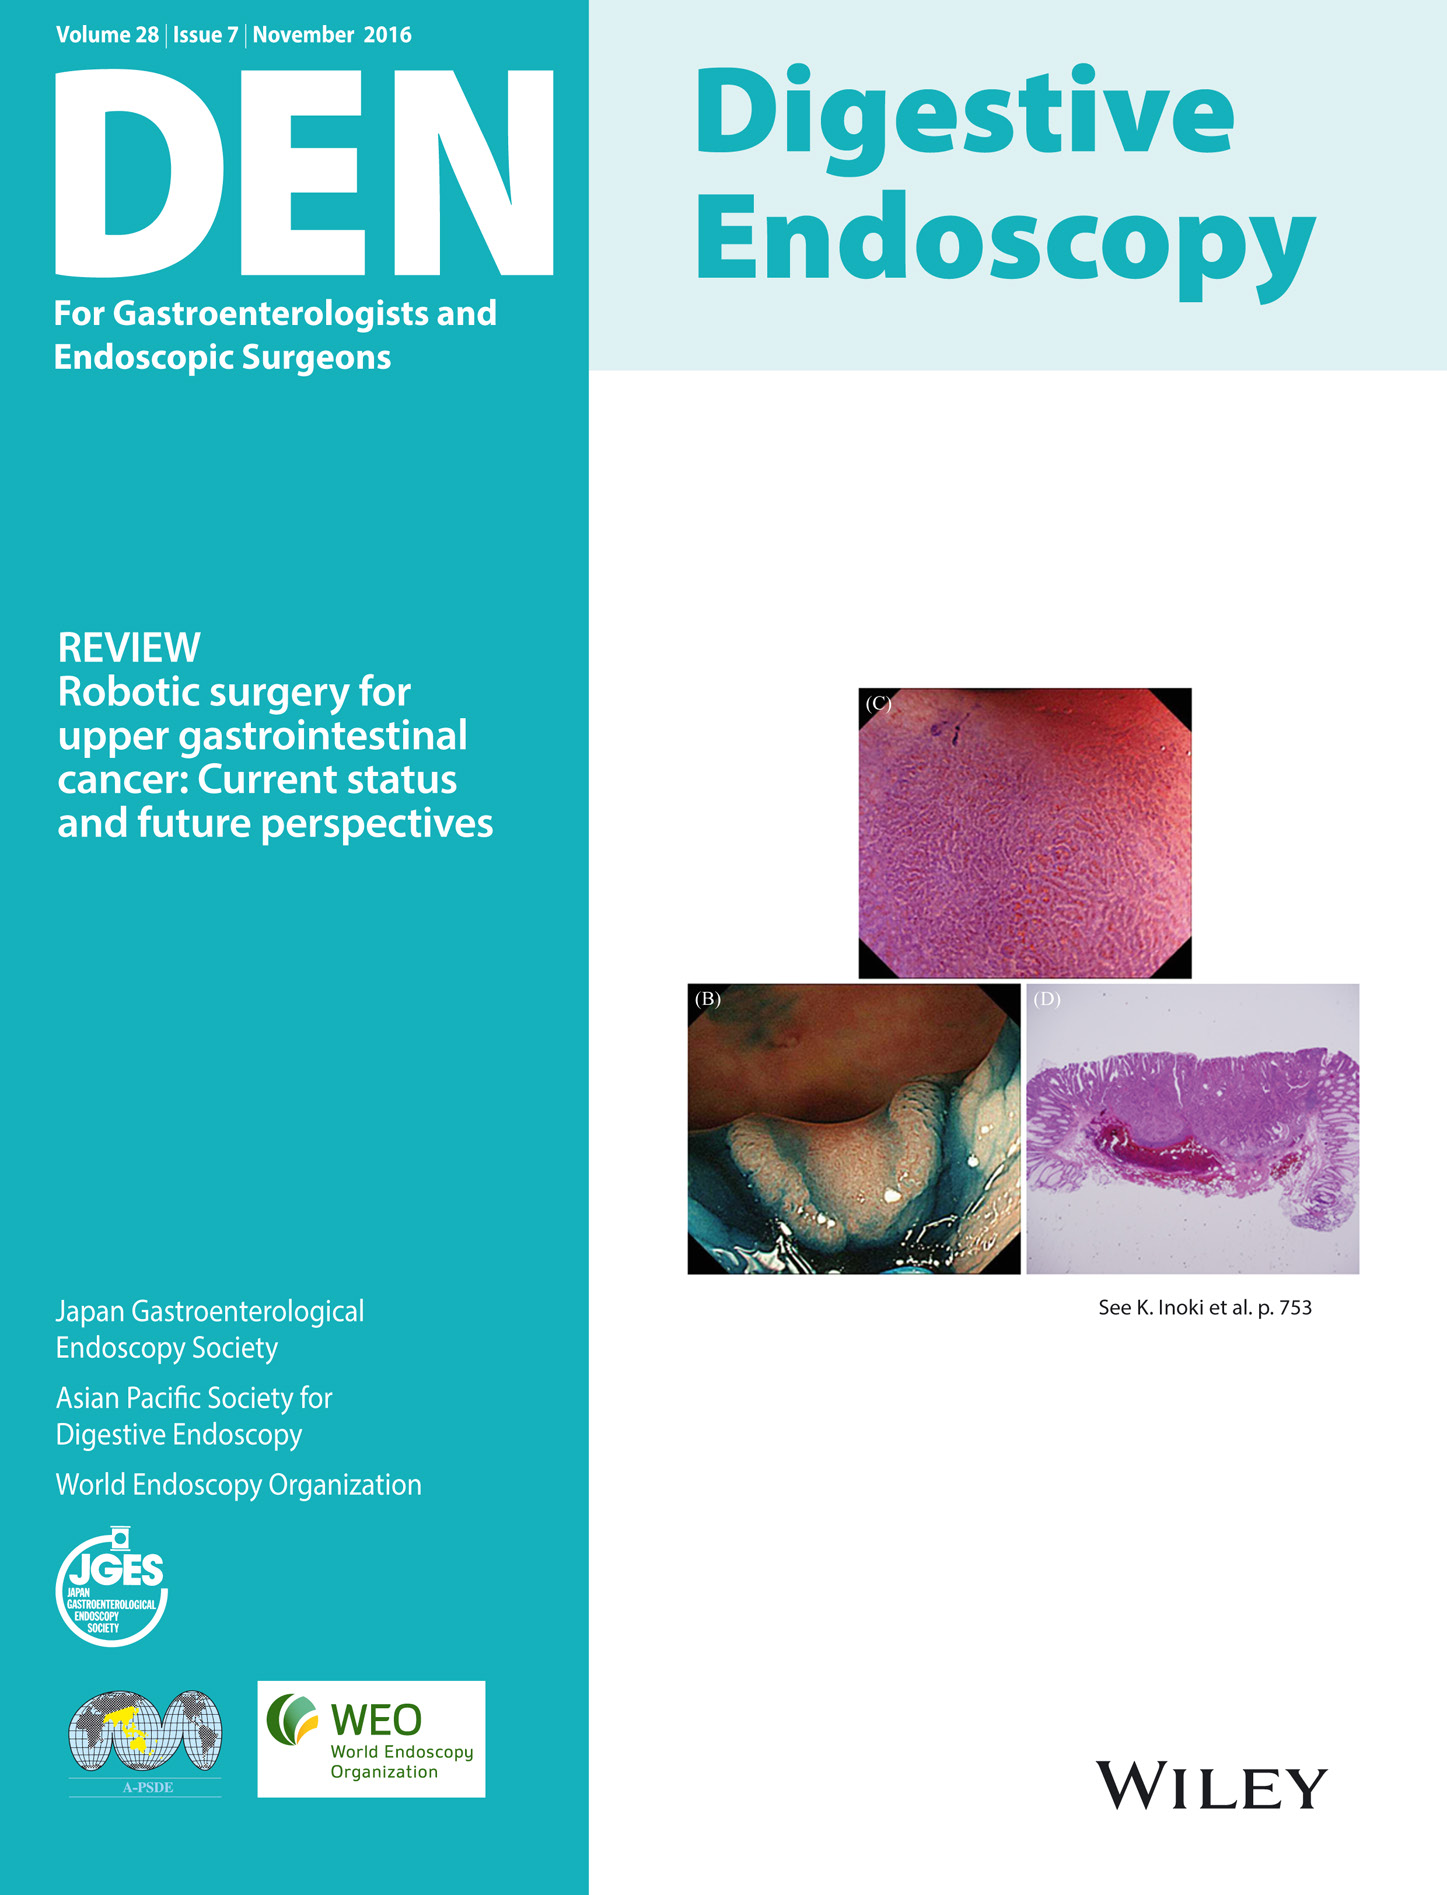 Digestive Endoscopy Vol28-7